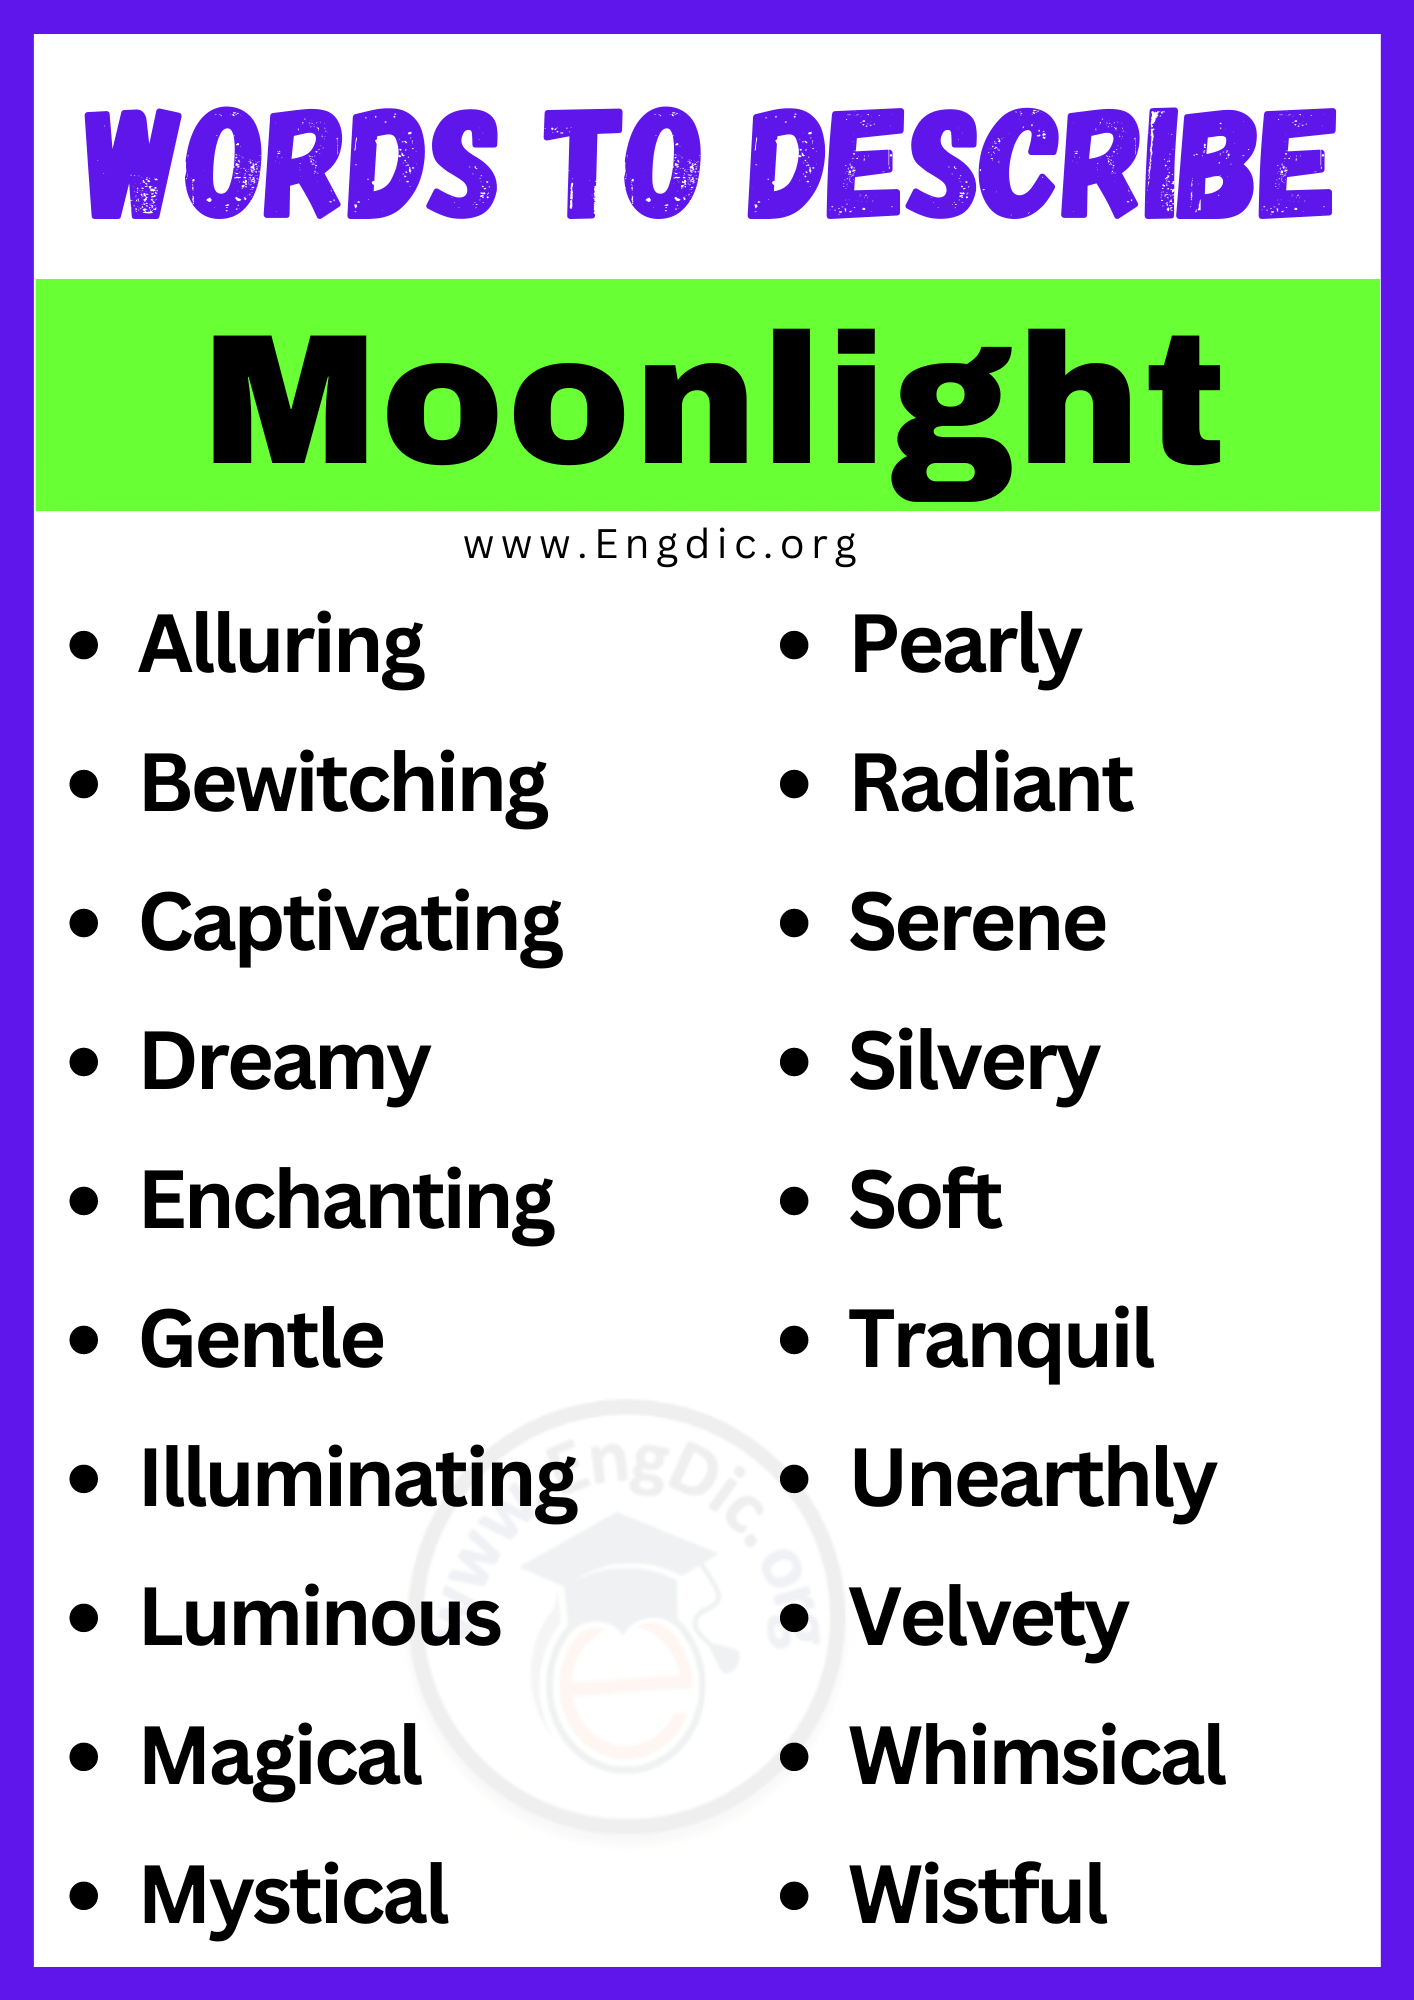 Words to Describe Moonlight